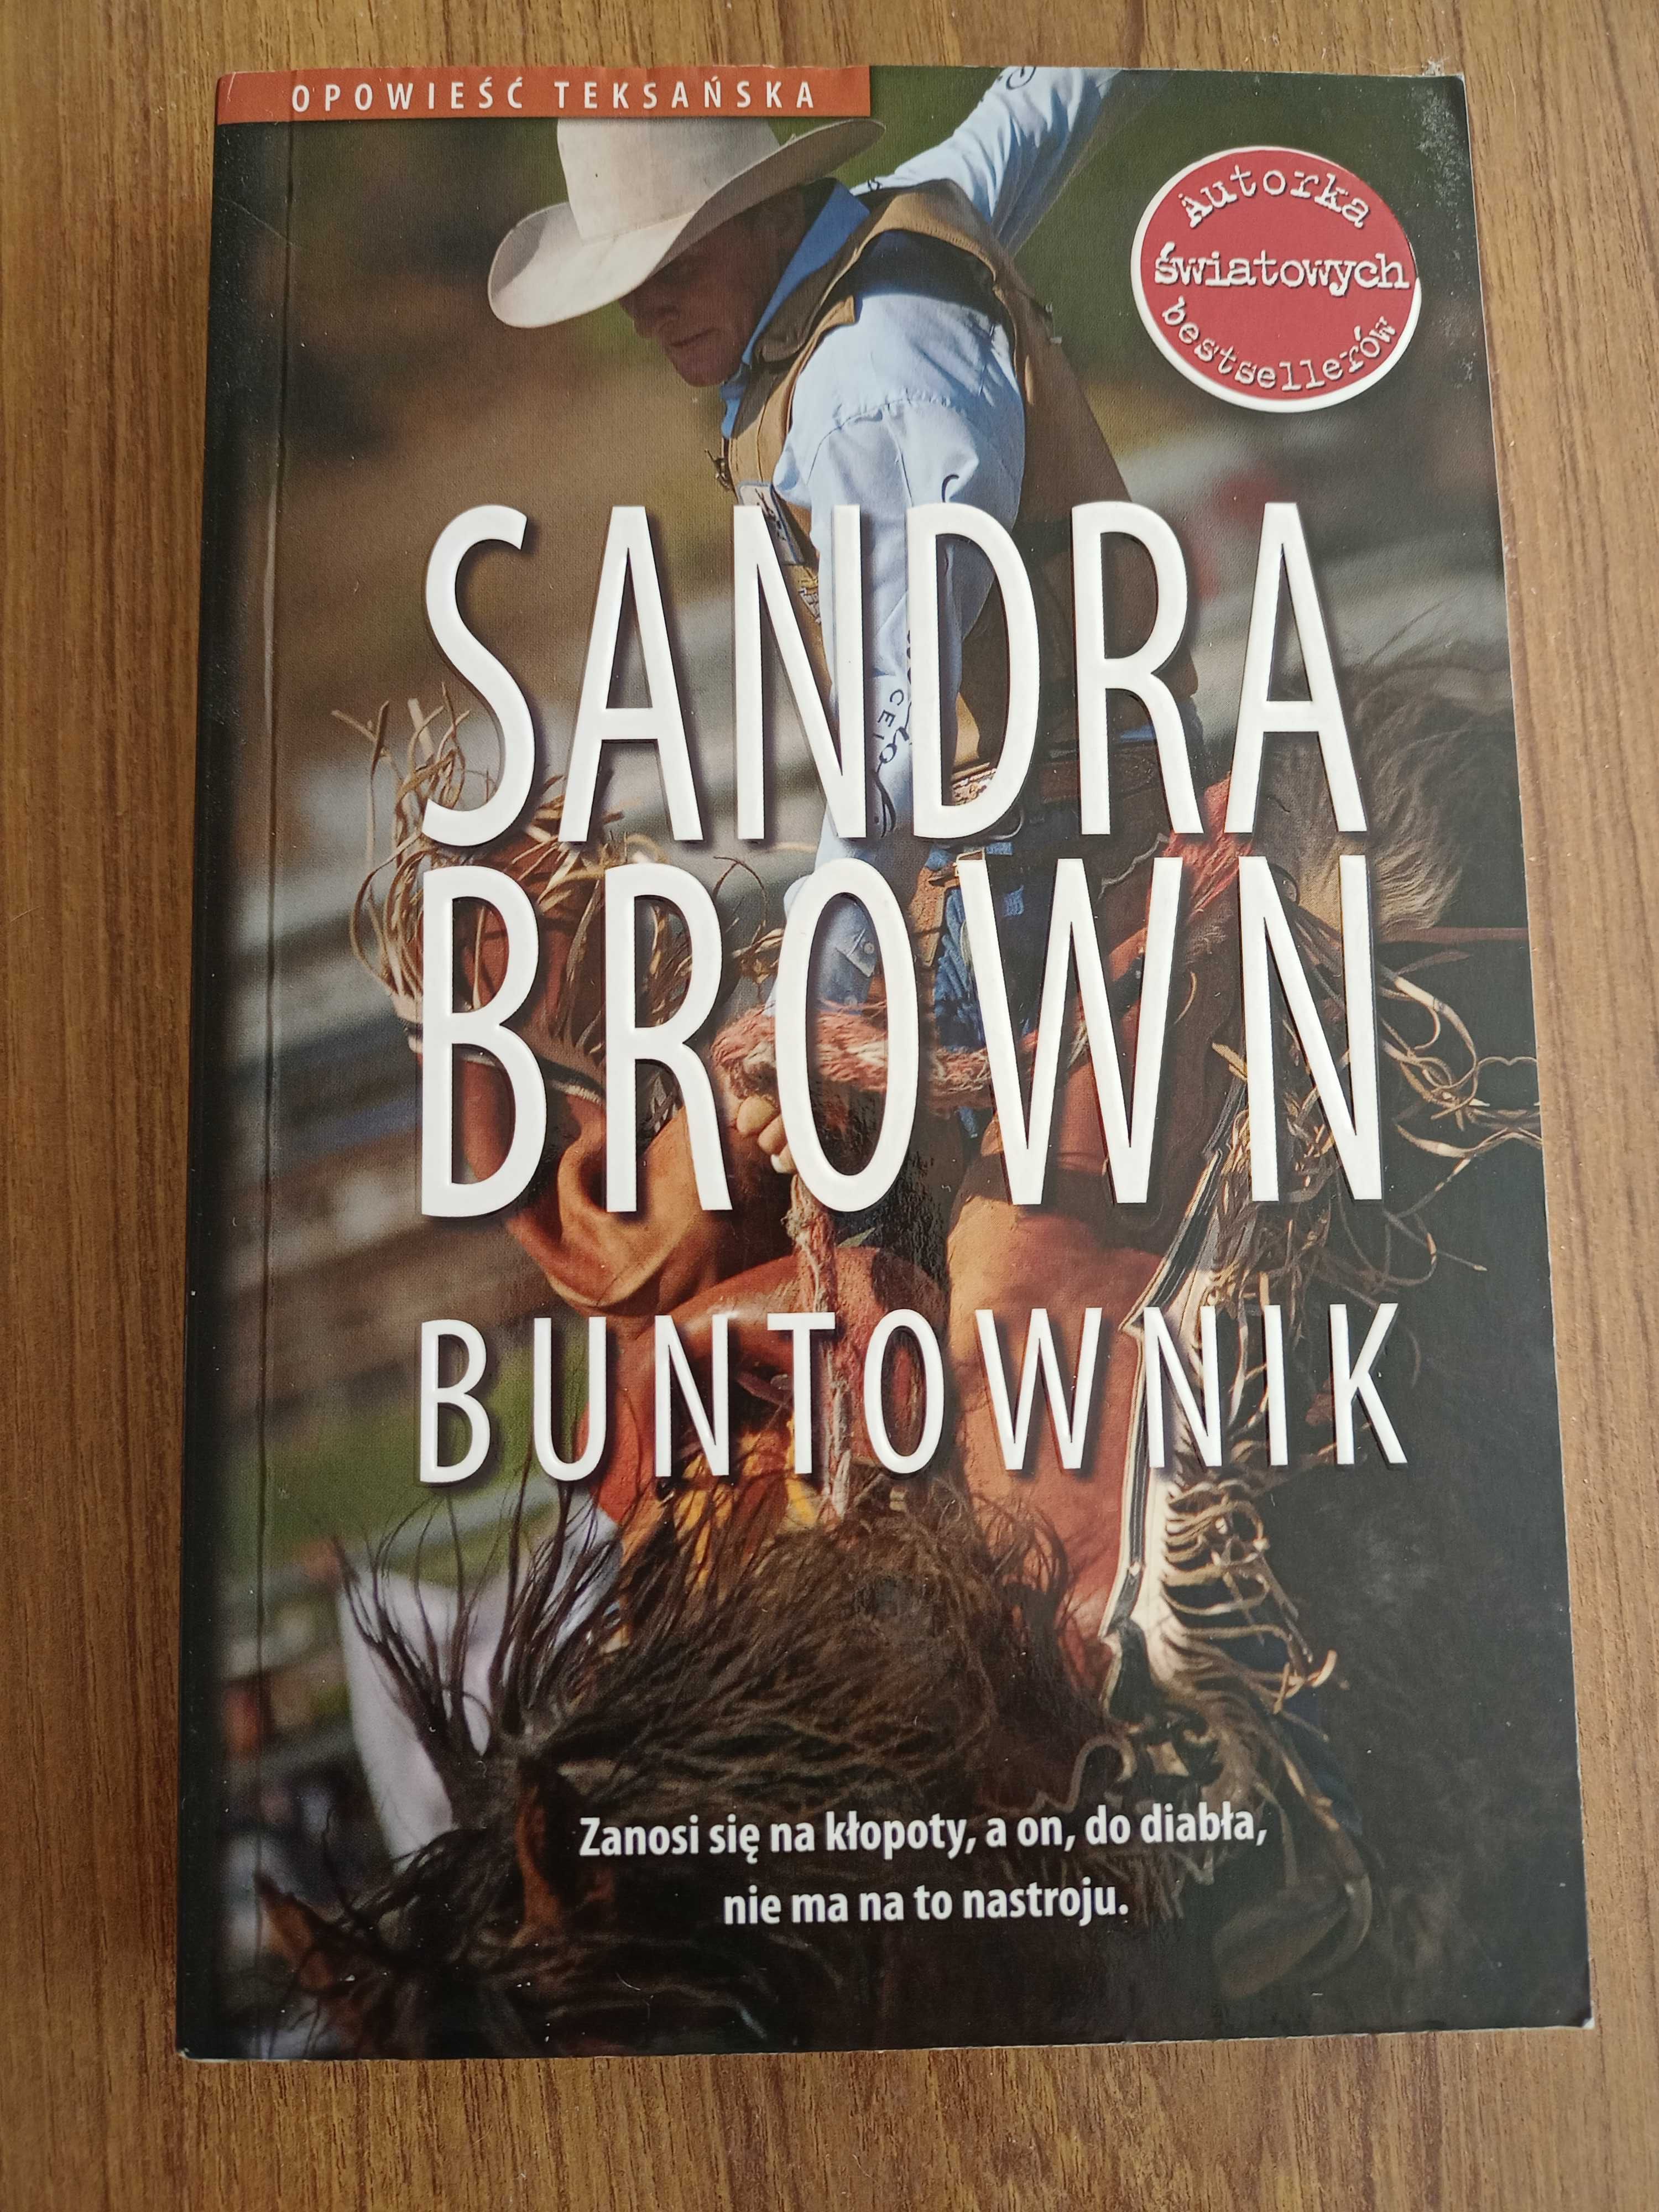 Sandra Brown "Buntownik"